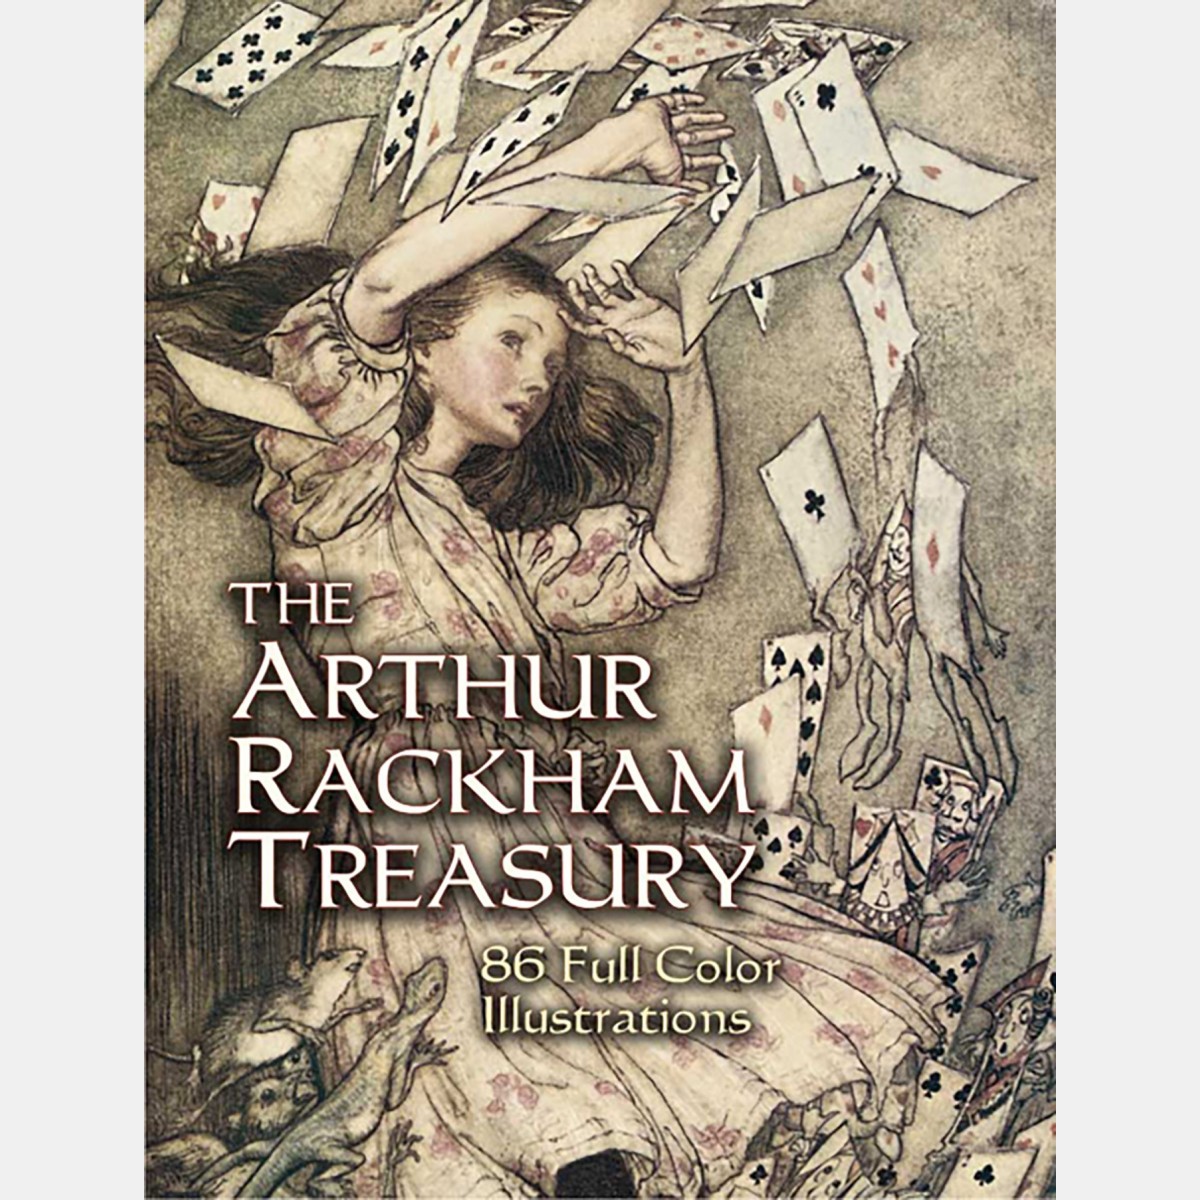 Arthur Rackham - The Arthur Rackham Treasury: 86 Full-Color Illustrations